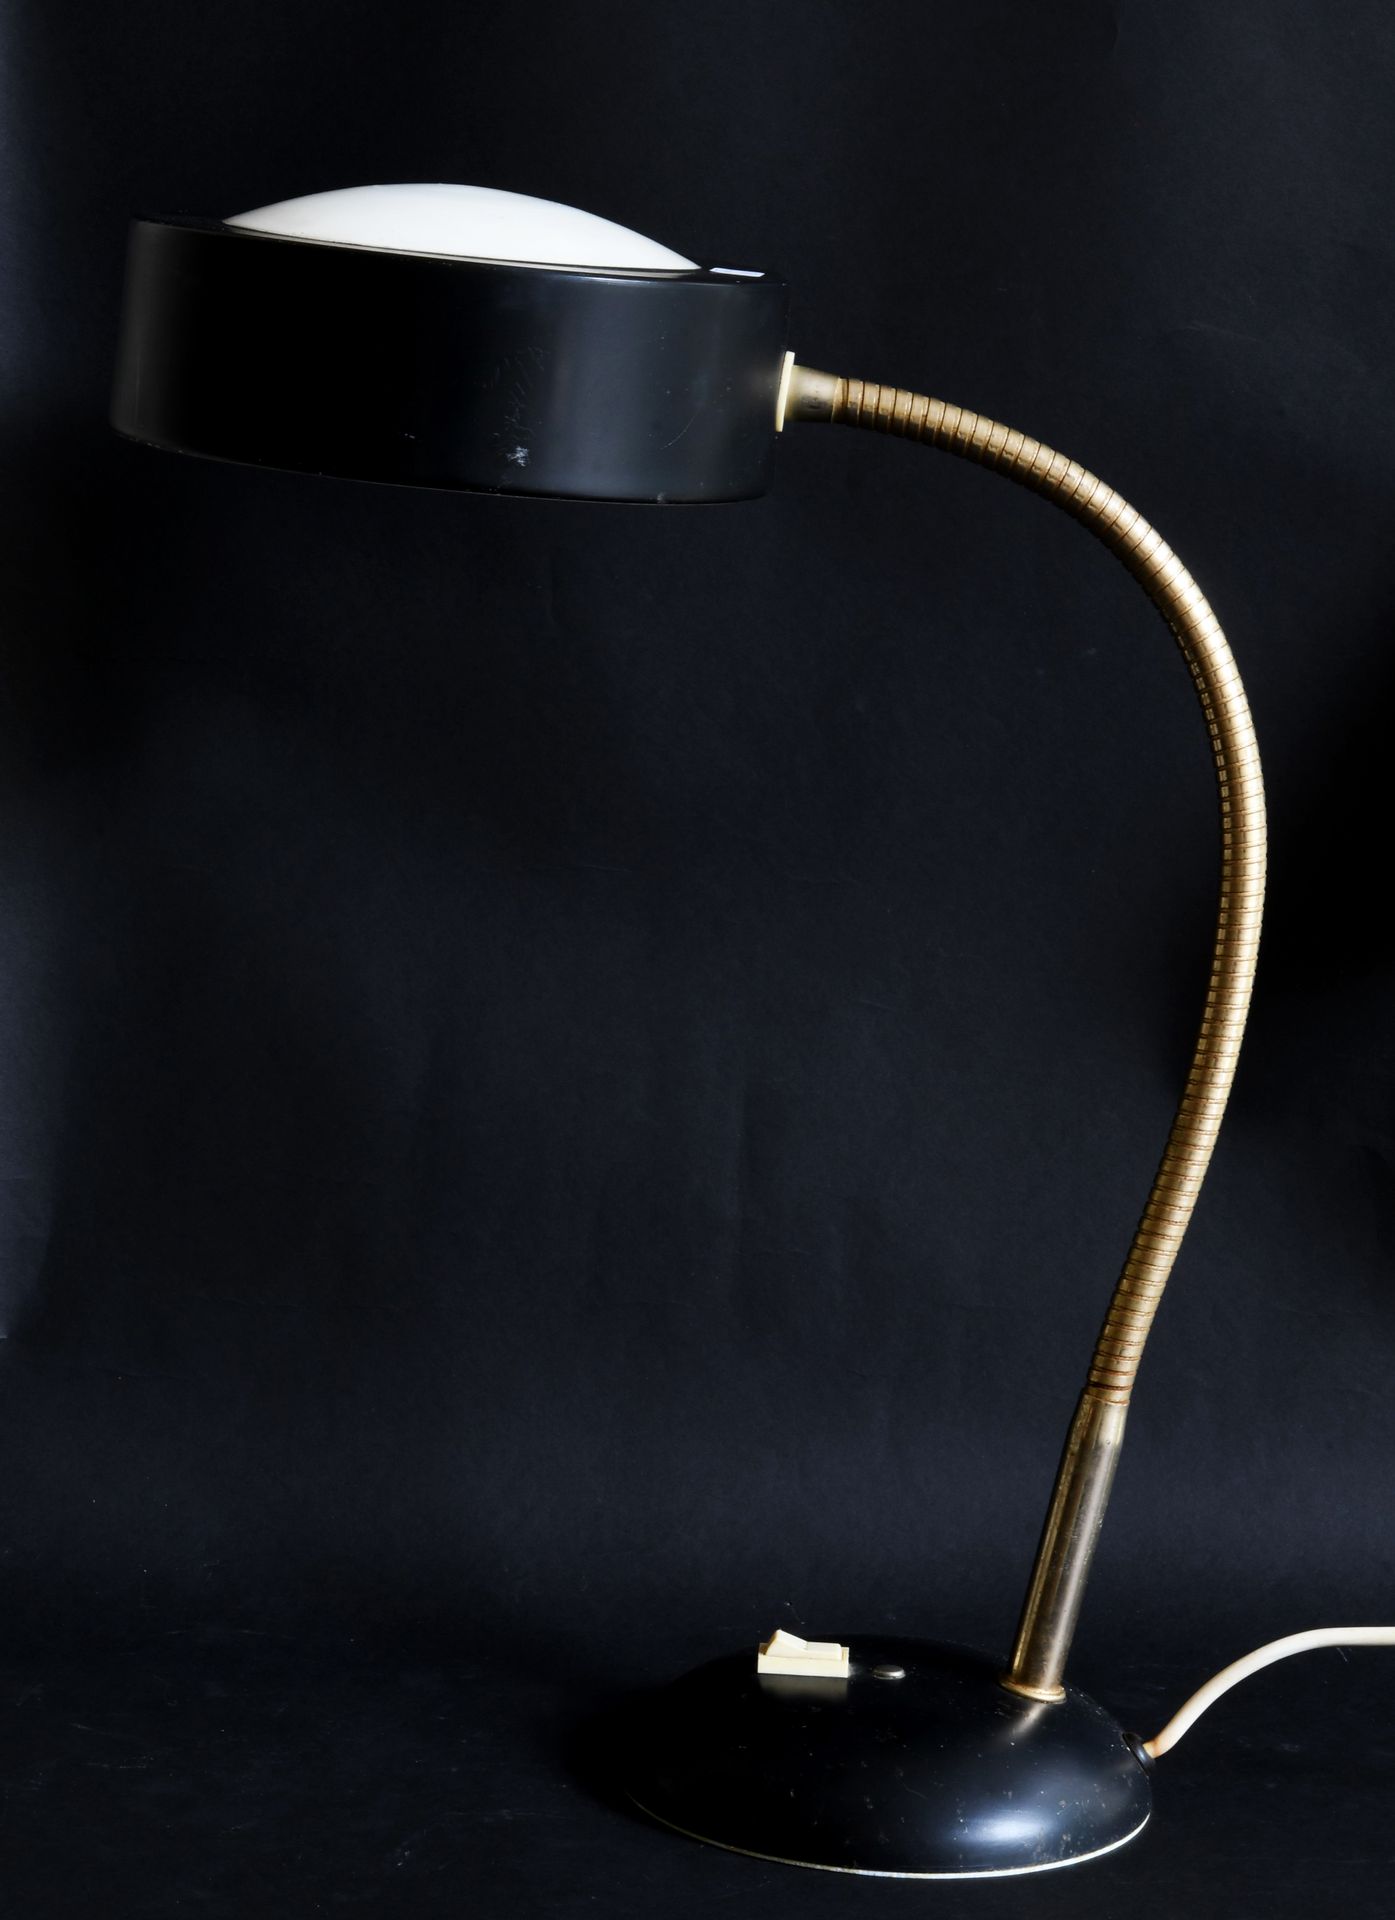 Null 以夏洛特-佩里昂的JUMO灯为风格。

黑色漆面金属灯罩的台灯，灵活的脚和漆面铸铁的圆形底座

观看时的最大高度：65厘米